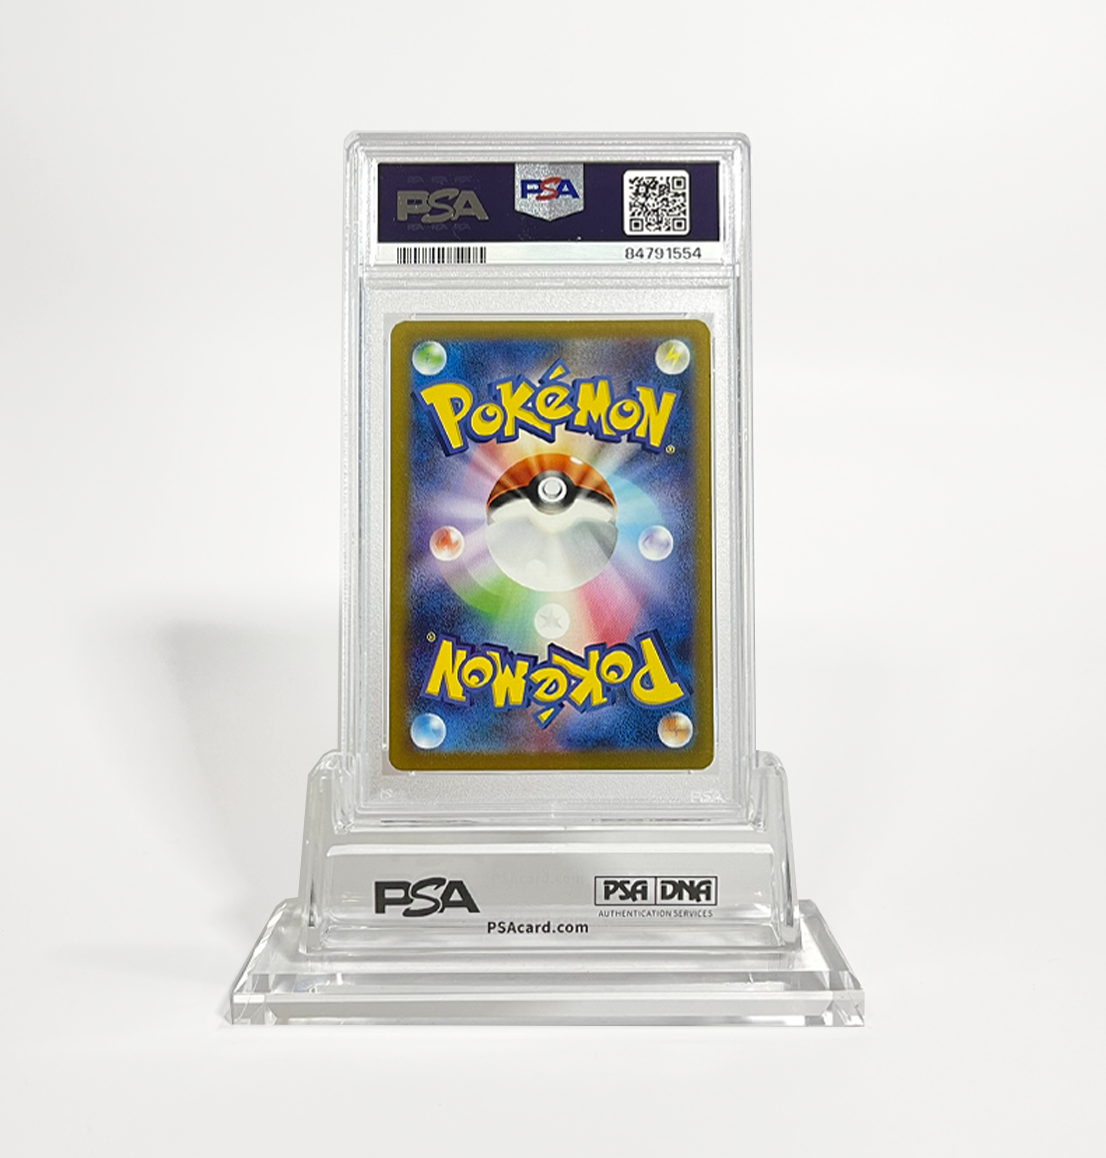 PSA 10 Pidgeotto #119 Ruler of the Black Flame SV3 Japanese Pokemon card